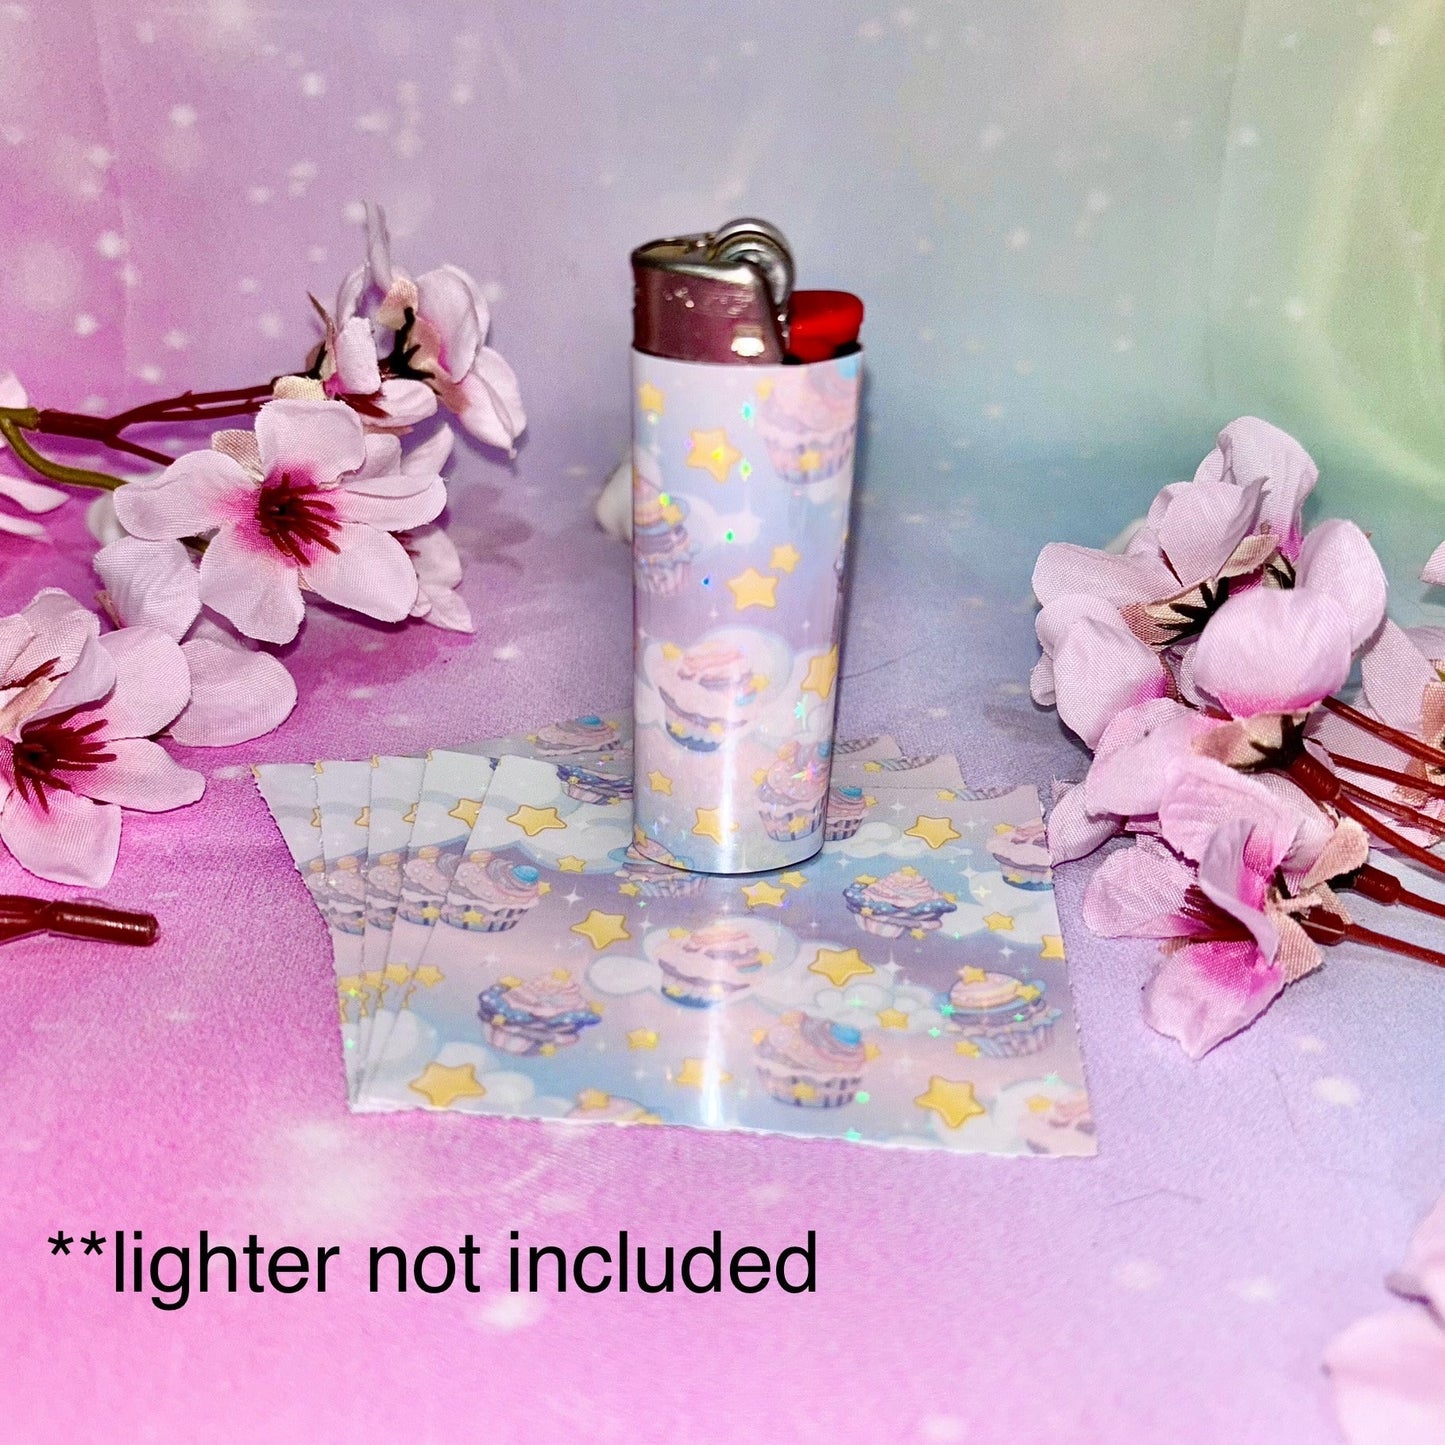 Celestial Cupcakes Lighter Wrap | cupcake lighter wrap, Kawaii lighter wraps, lighter wraps, cupcake art, girly stickers, Kawaii, stickers